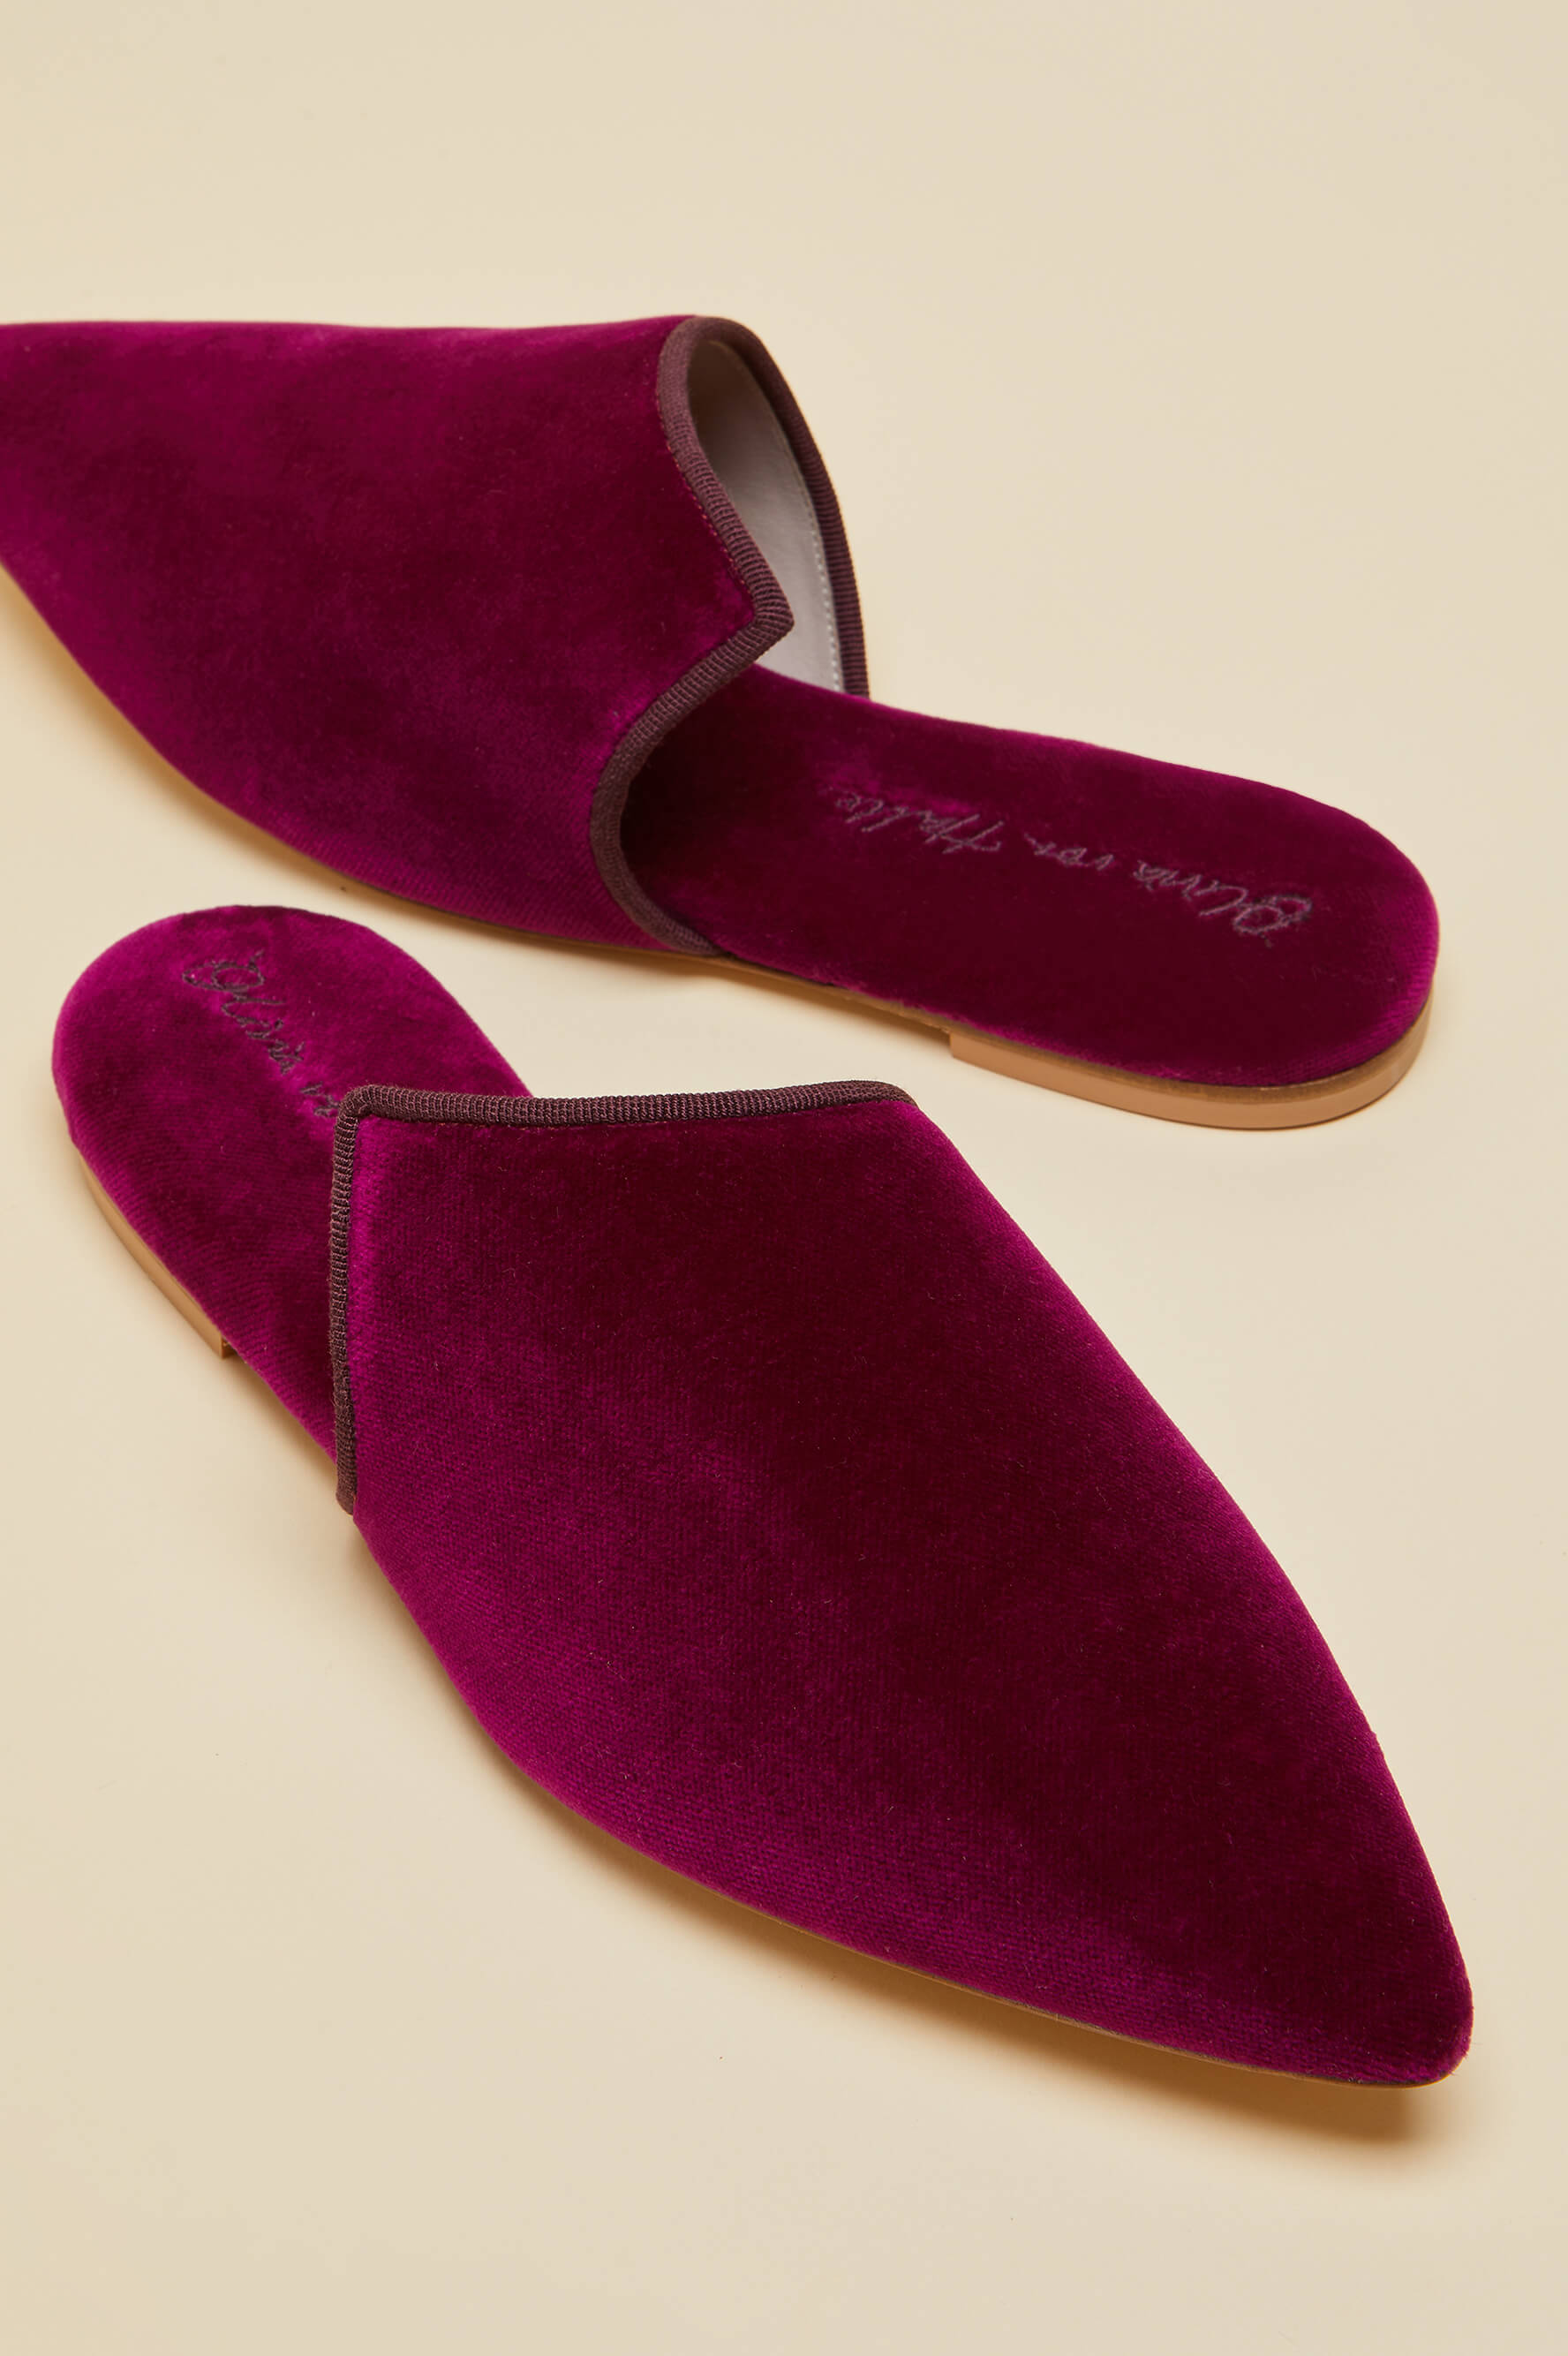 Contessa Pasha Pink Slippers in Velvet